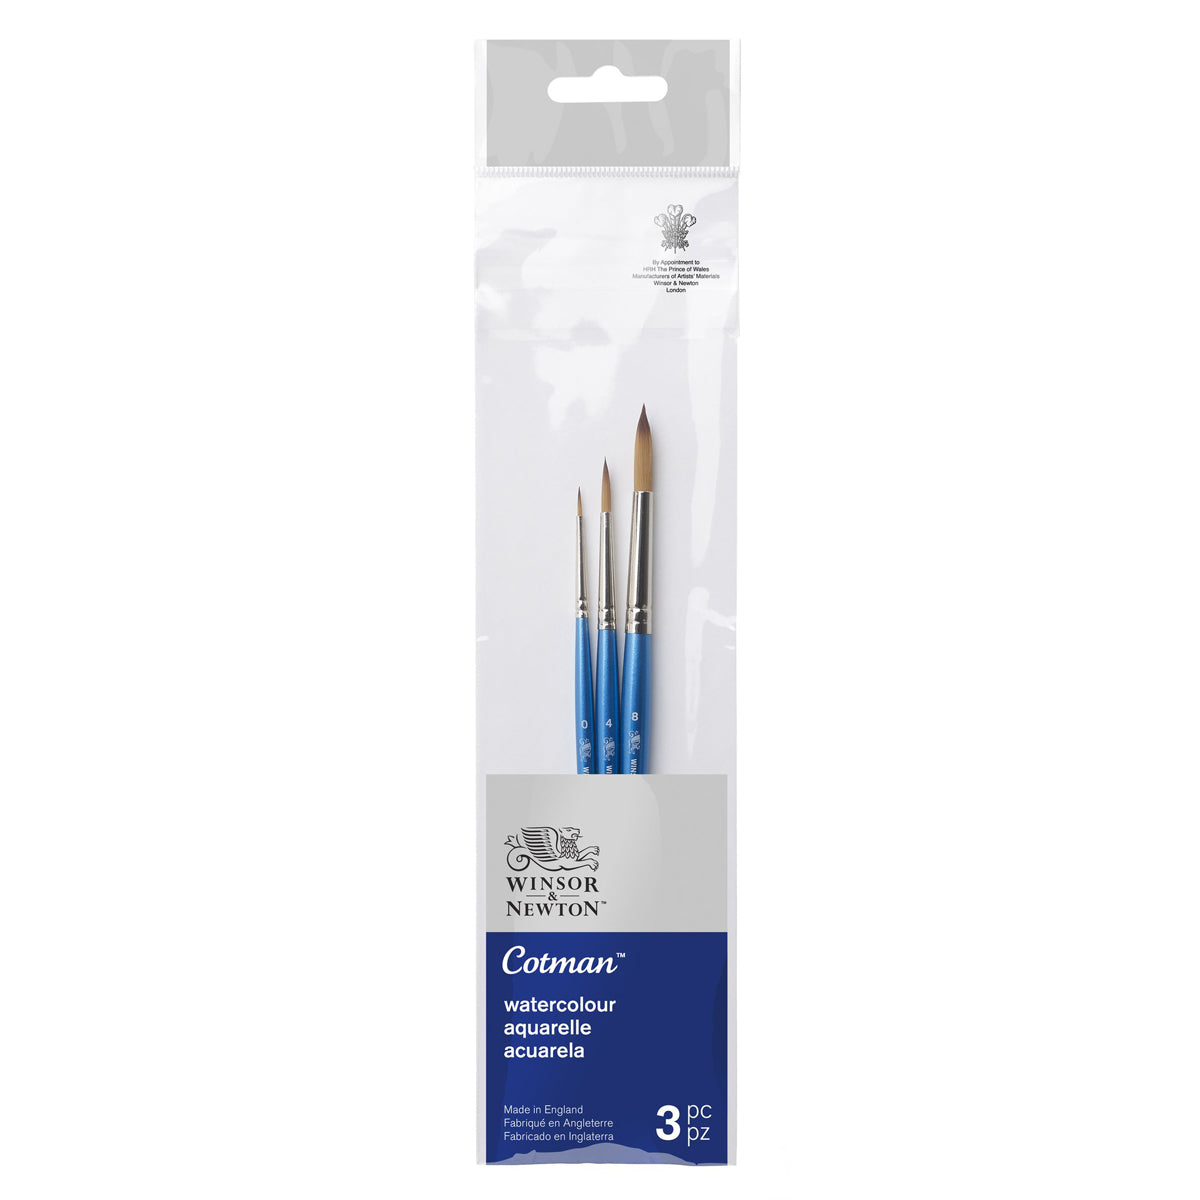 Winsor & Newton - Cotman Watercolour Short Handle Set No2 - 3x Brushes